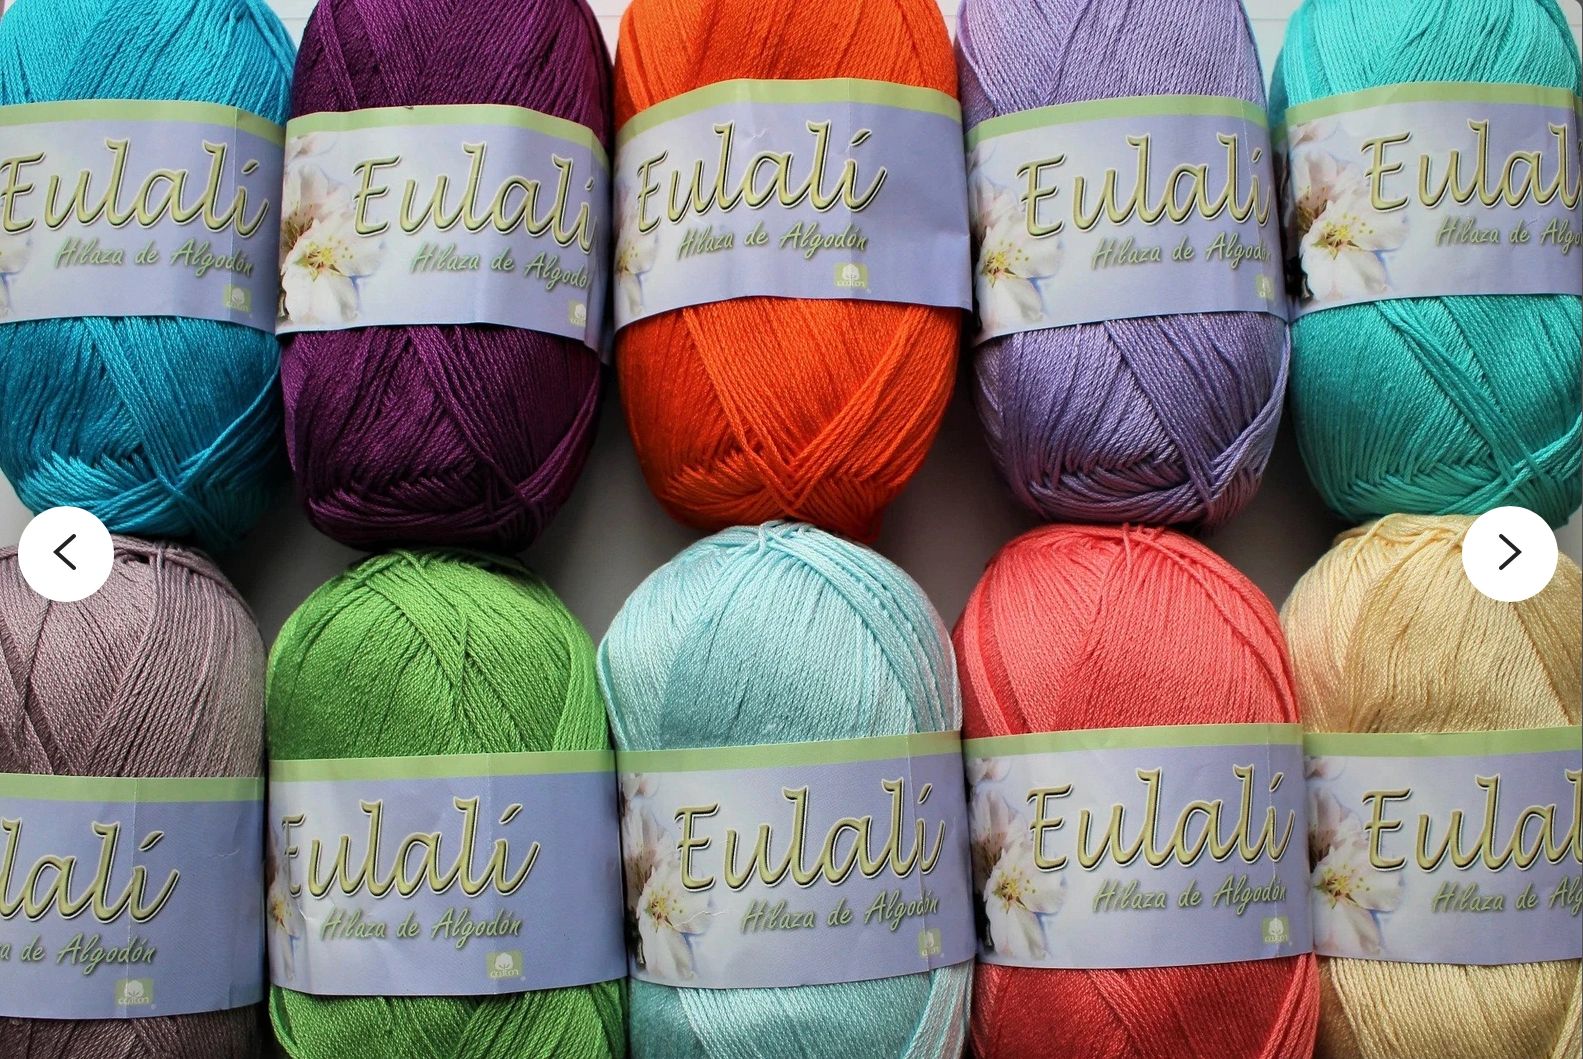 Eulali Omega Mexican Yarn
100% mercerized cotton